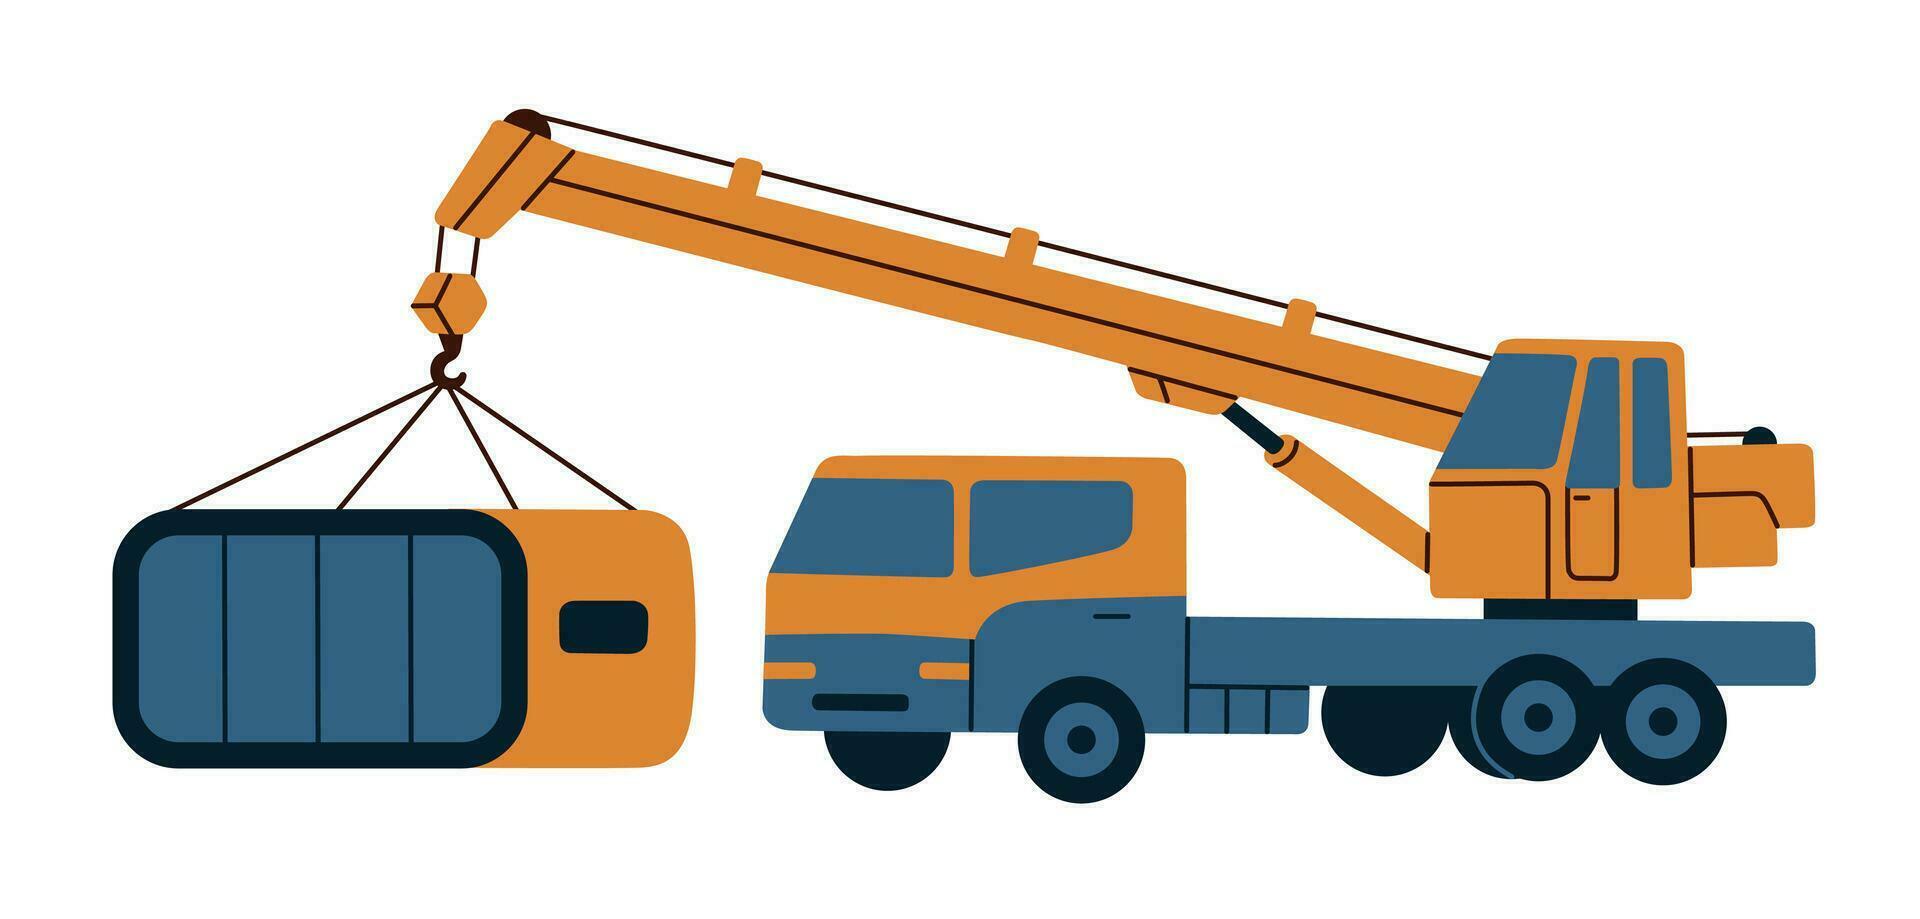 Truck crane lifts assembled modular home. Flat vector illustration on white background.